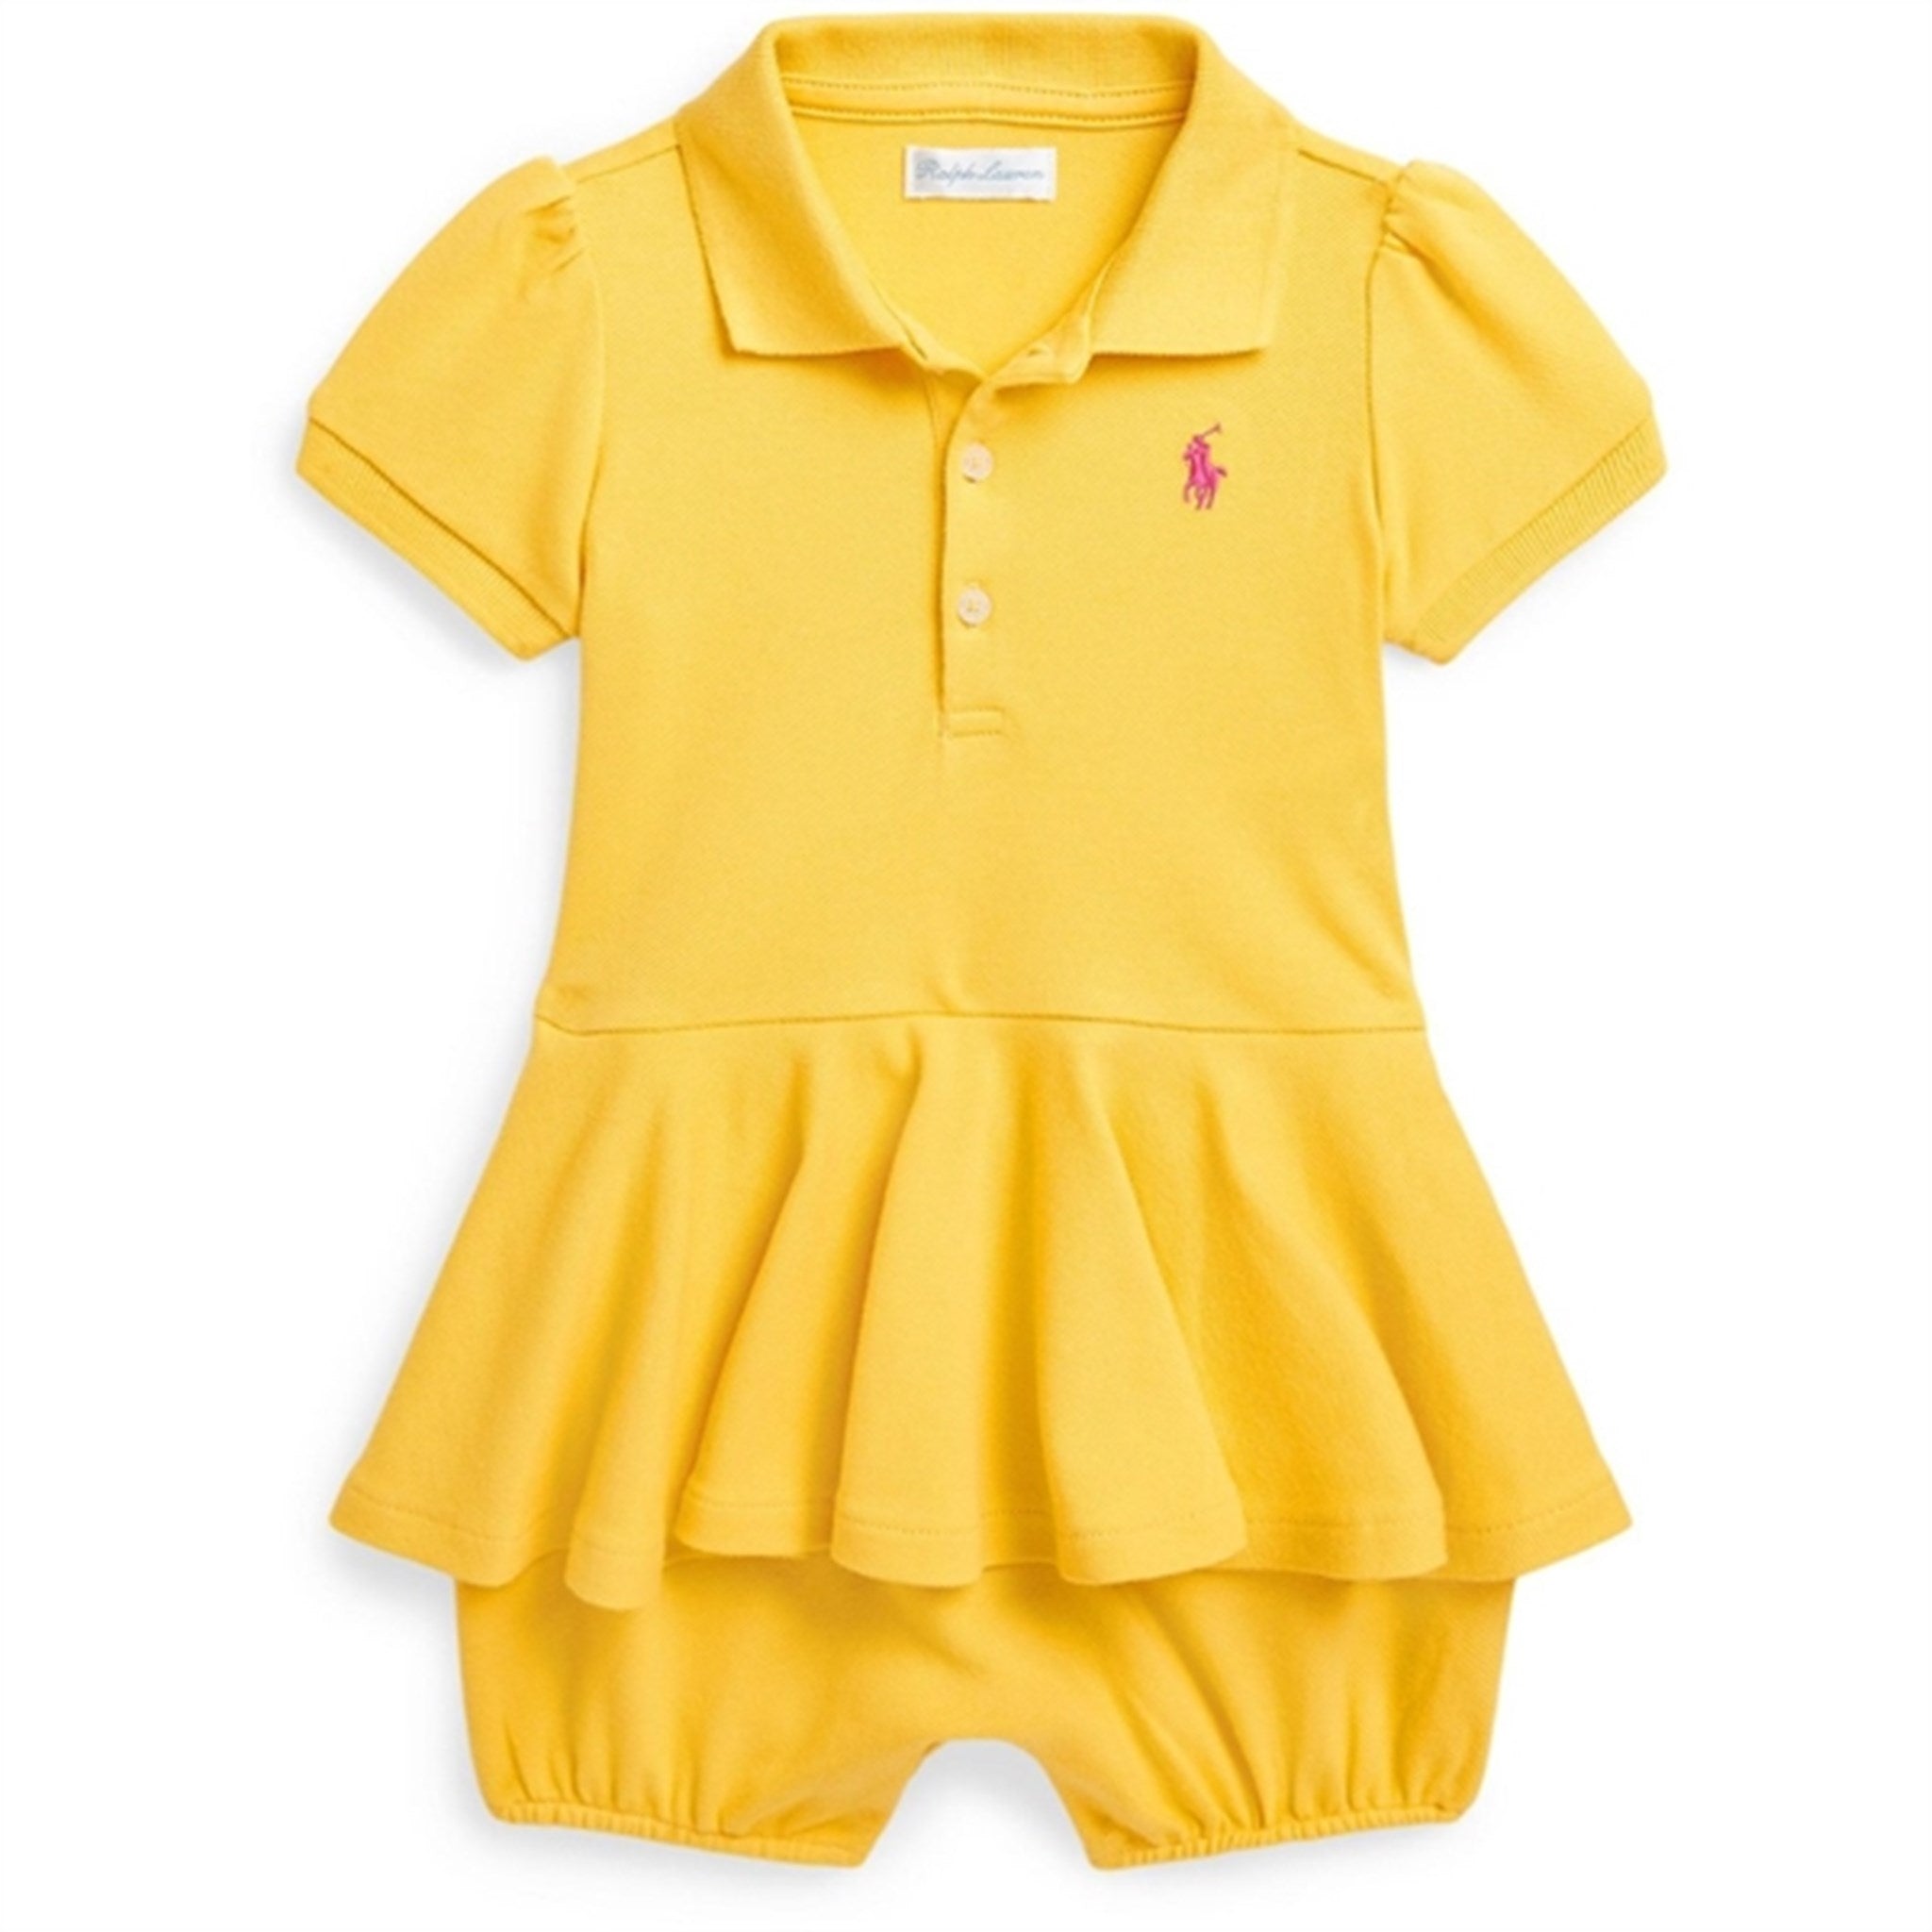 Ralph Lauren Baby Shortall Chrome Yellow W/ Bright Pink